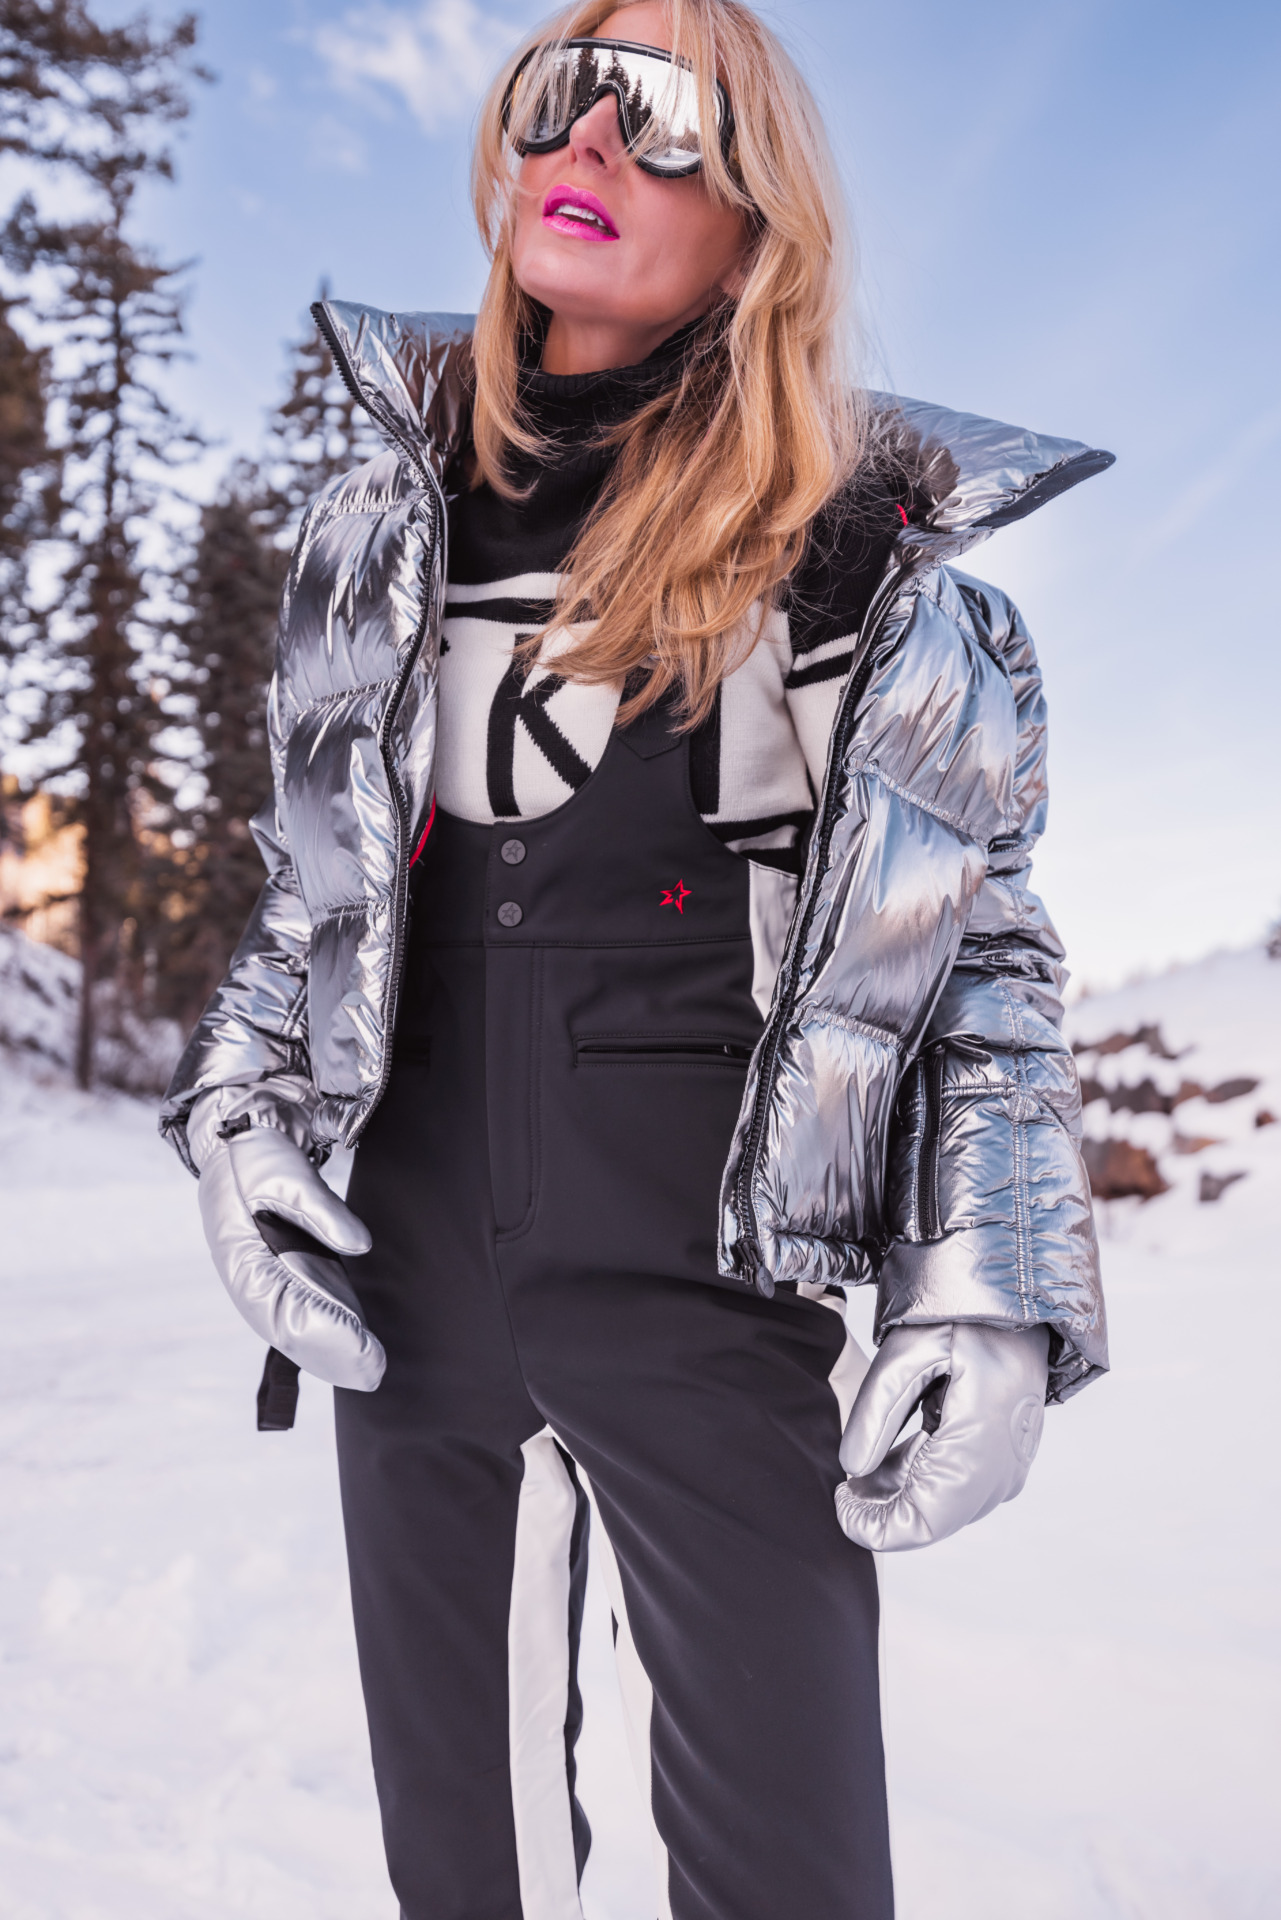 Stylish Ski Outfit ideas